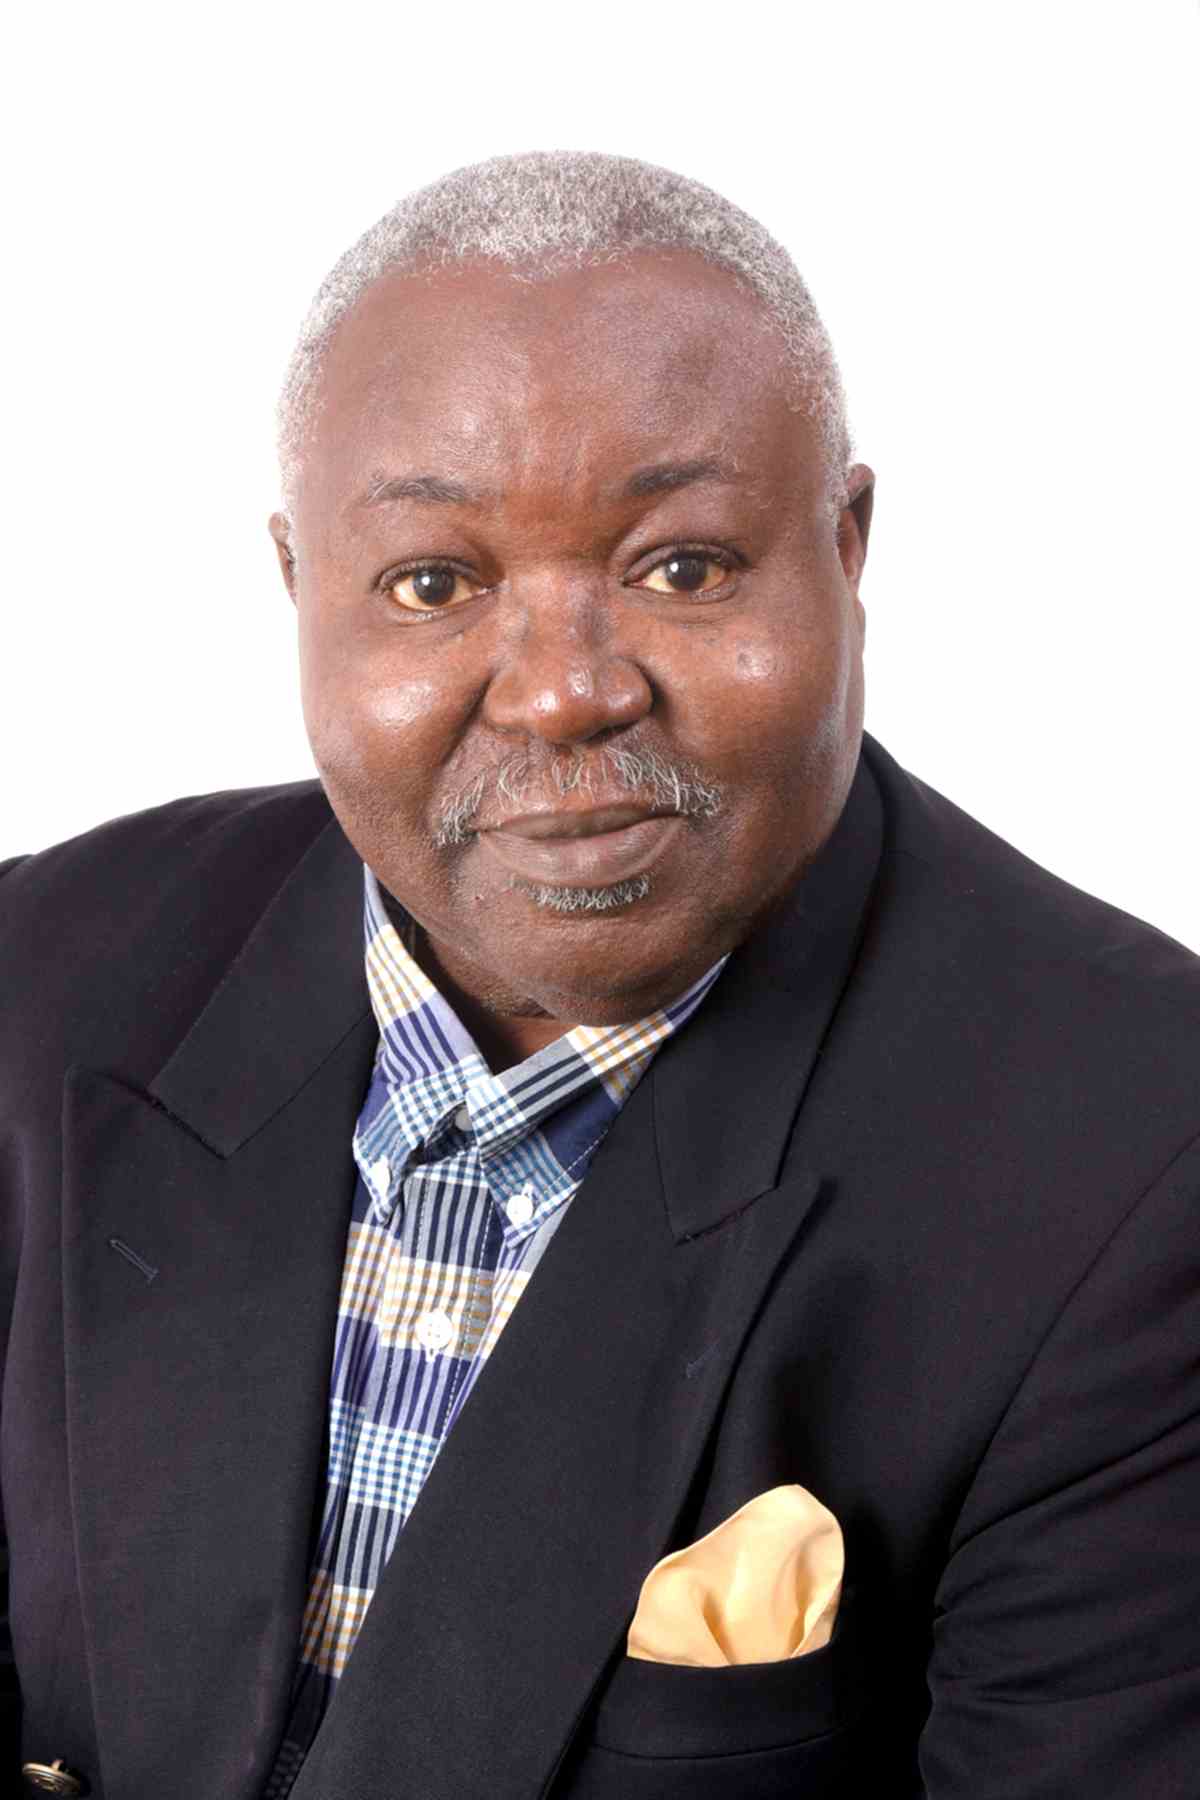 Mr. Emmanuel Ofori-Anyinam